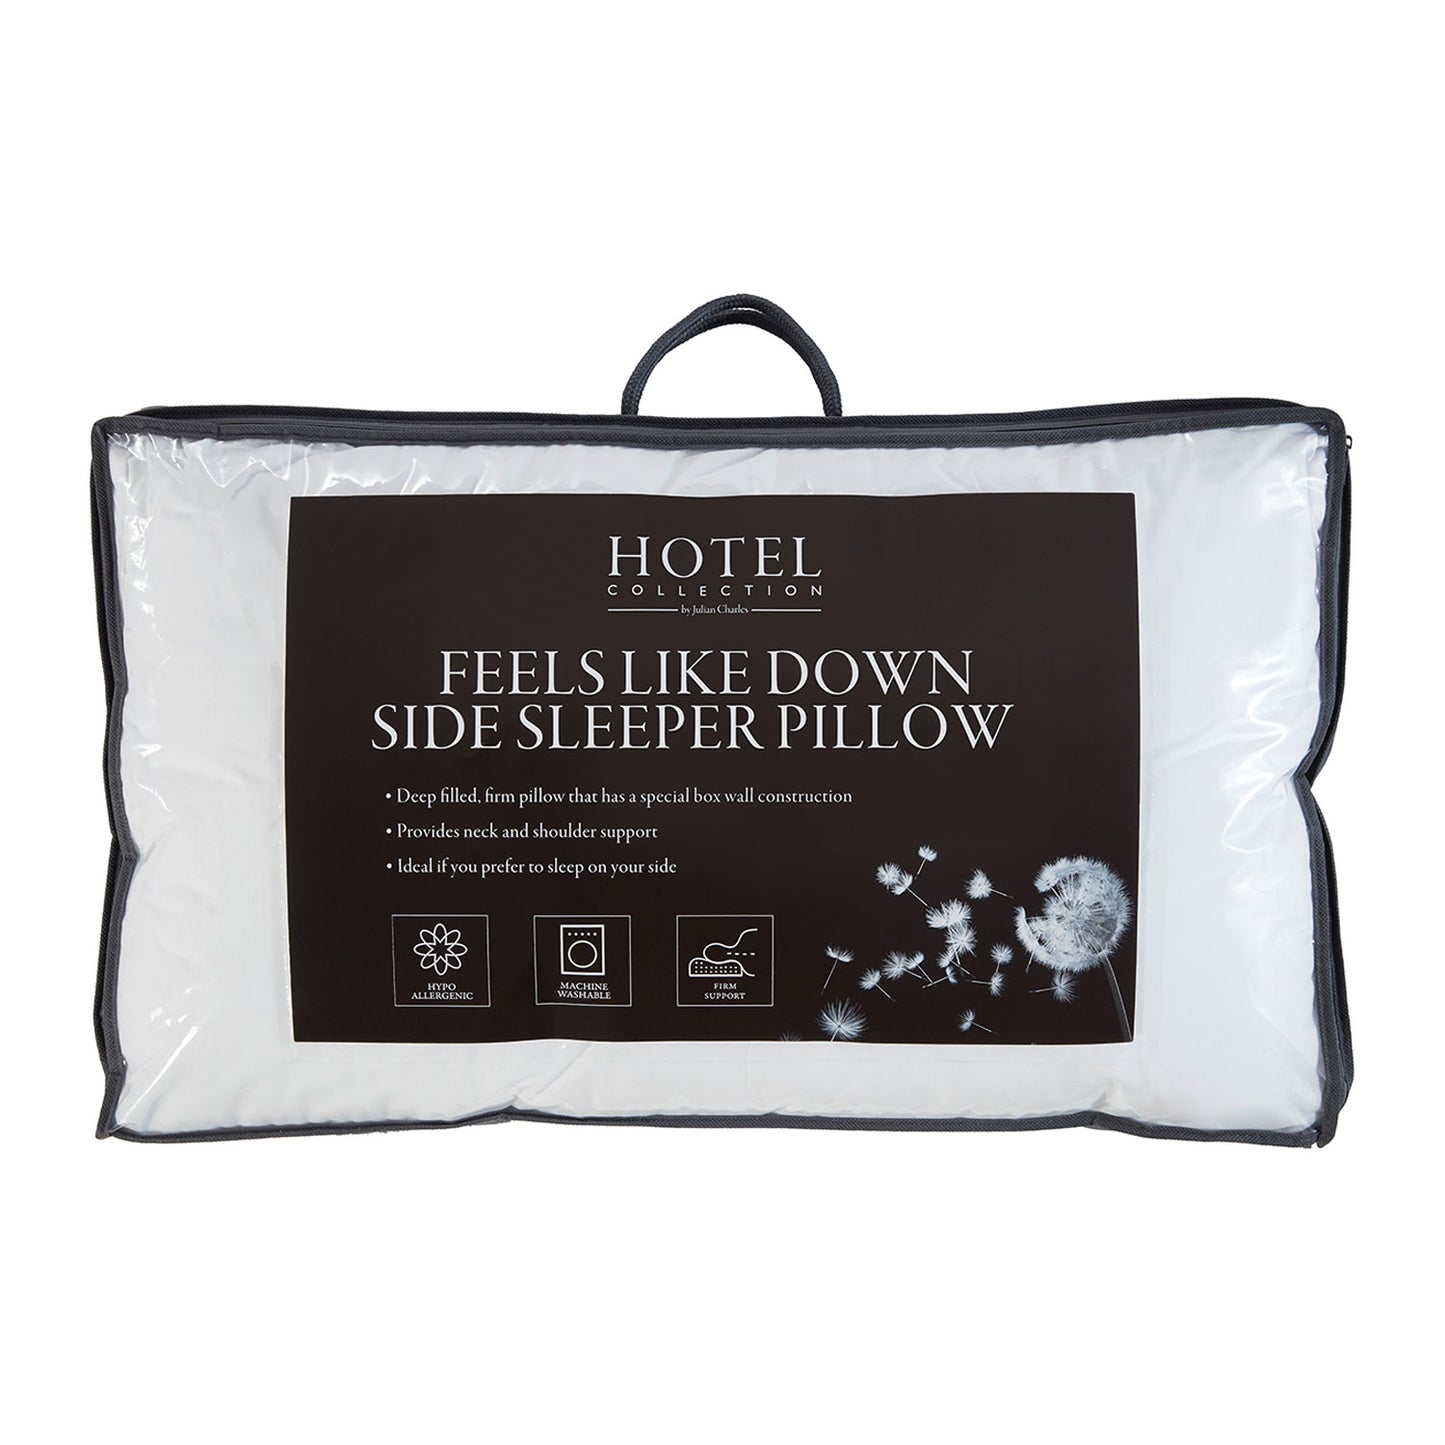 Feels Like Down Hotel Side Sleeper Pillow - Medium/Firm Filling